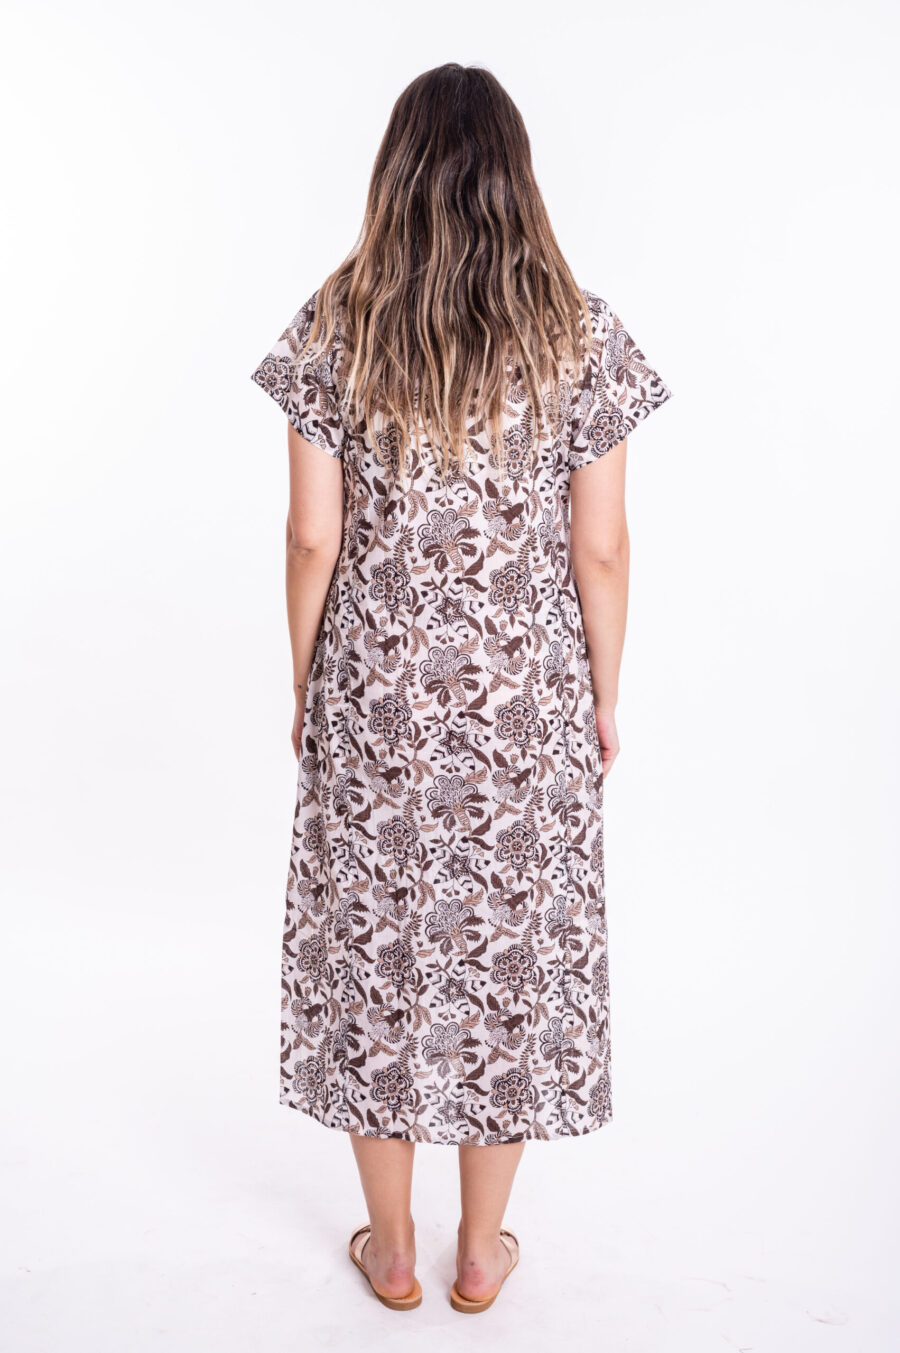 Jalabiya dress | Uniquely designed dress - white dress with a brown floral print